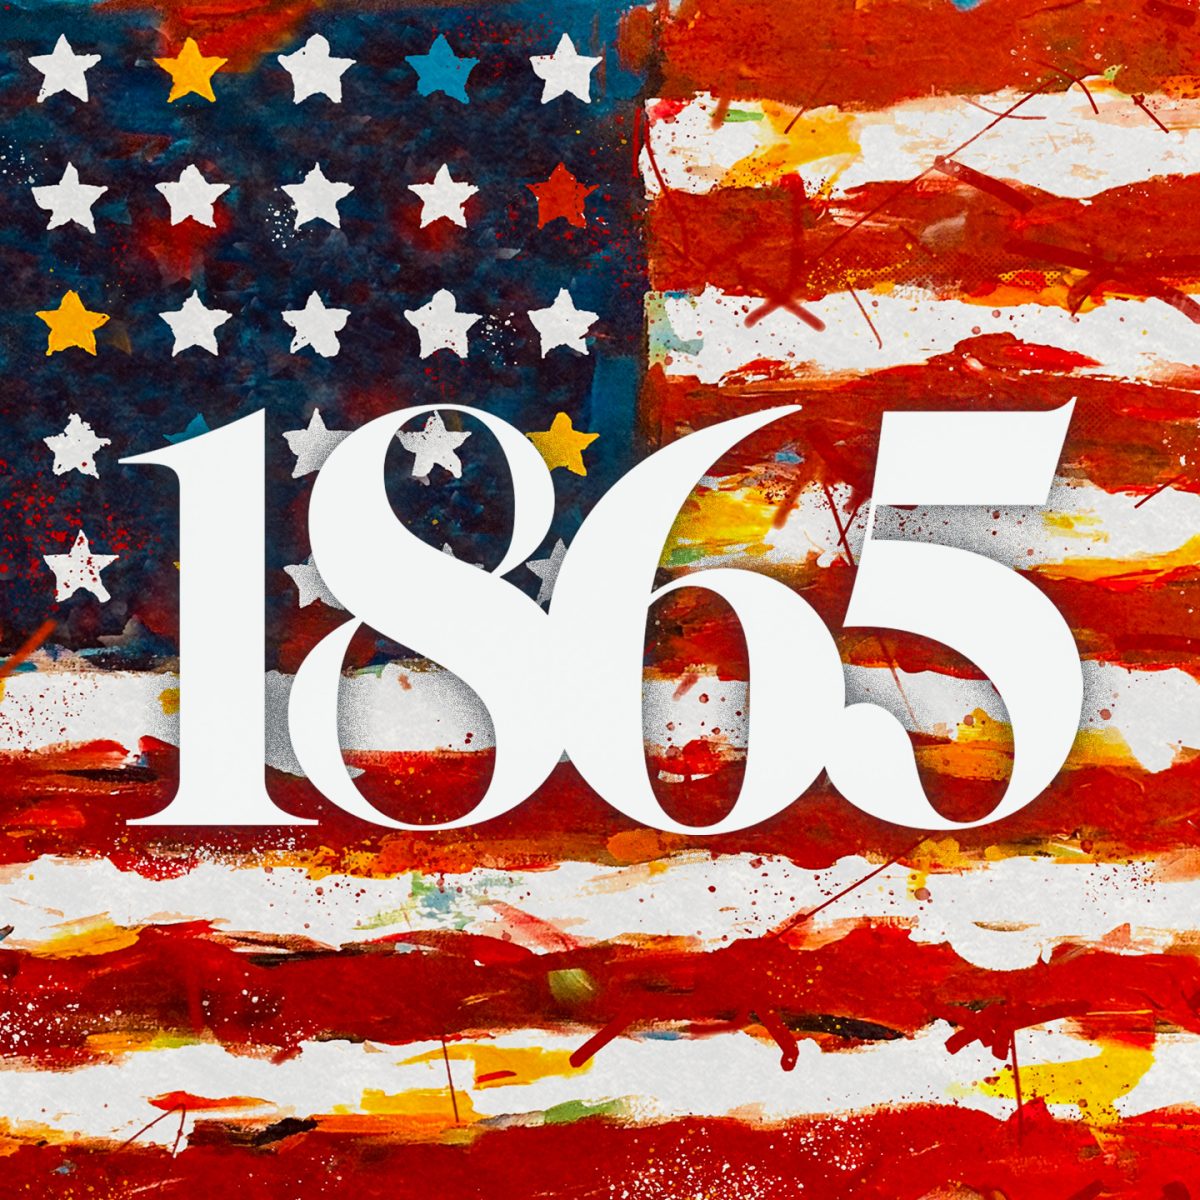 1865+Podcast